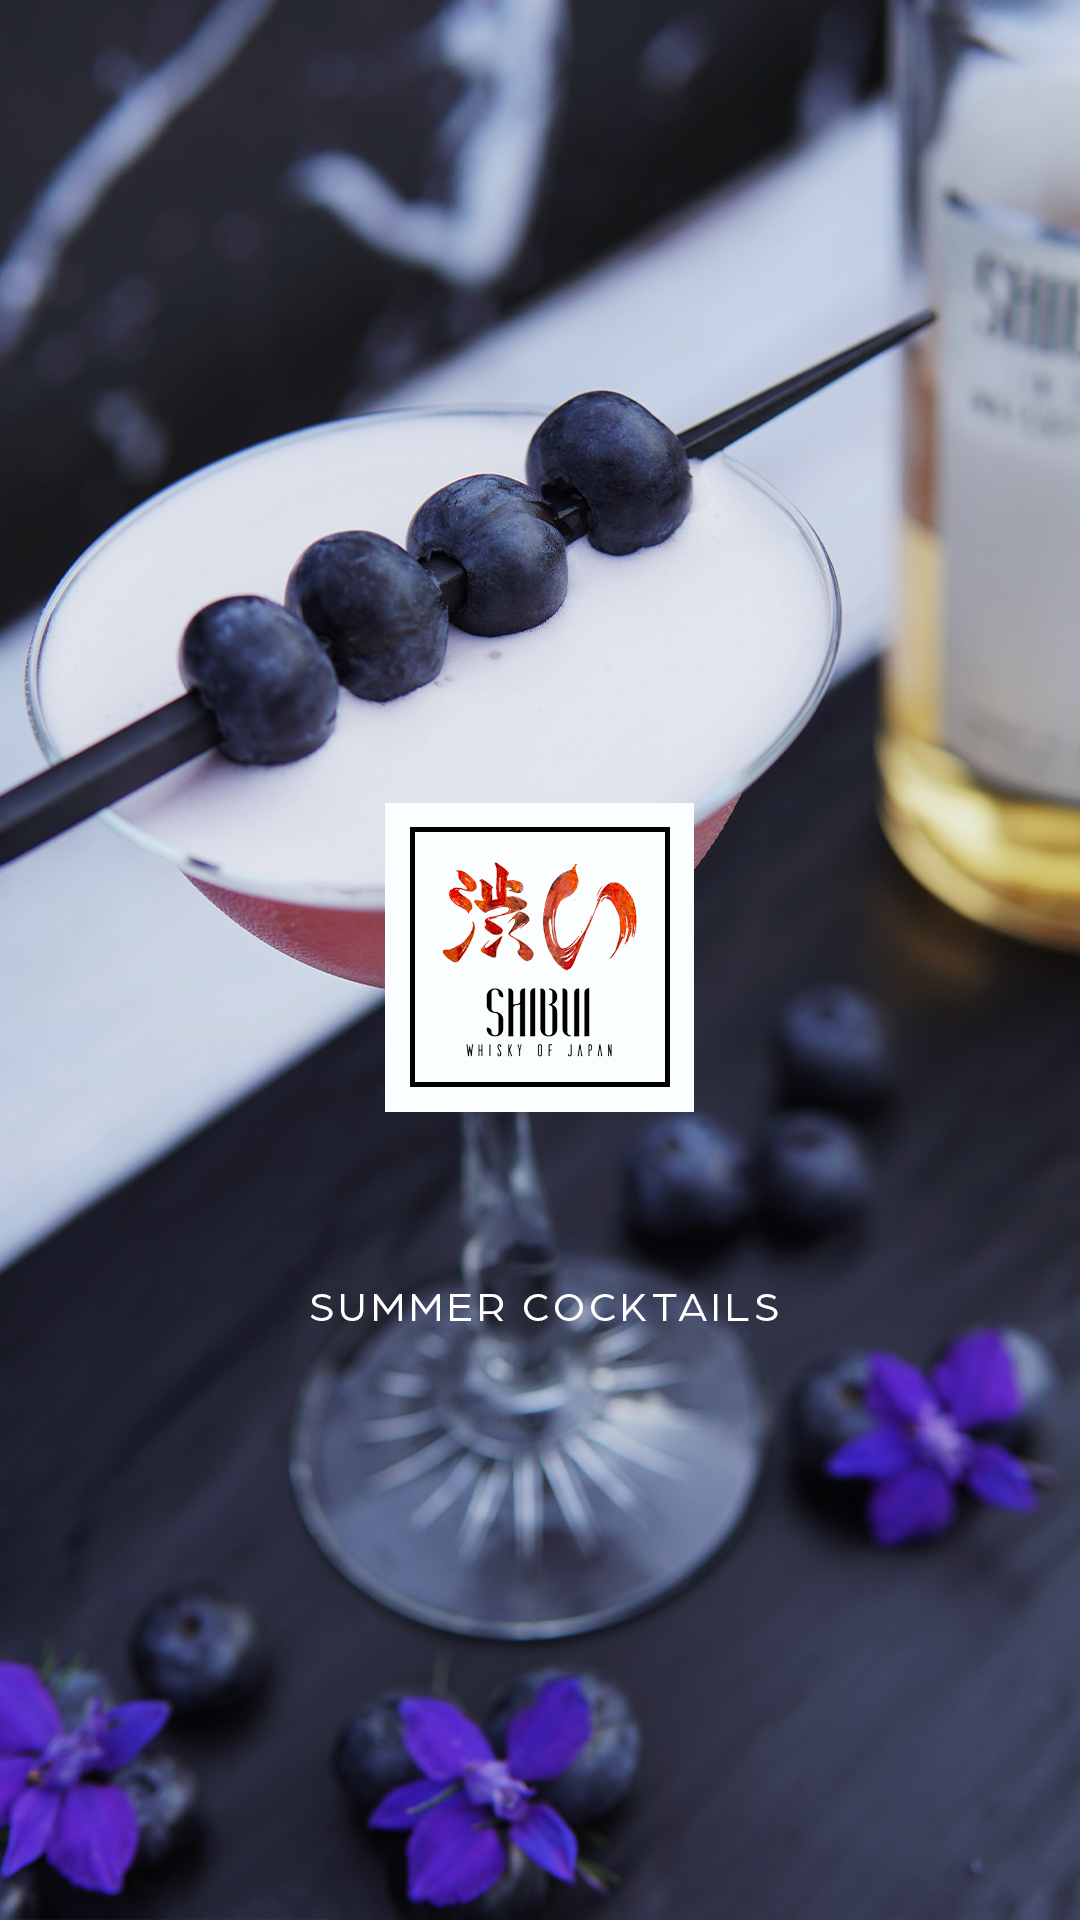 Shibui summer cocktails cover image.png